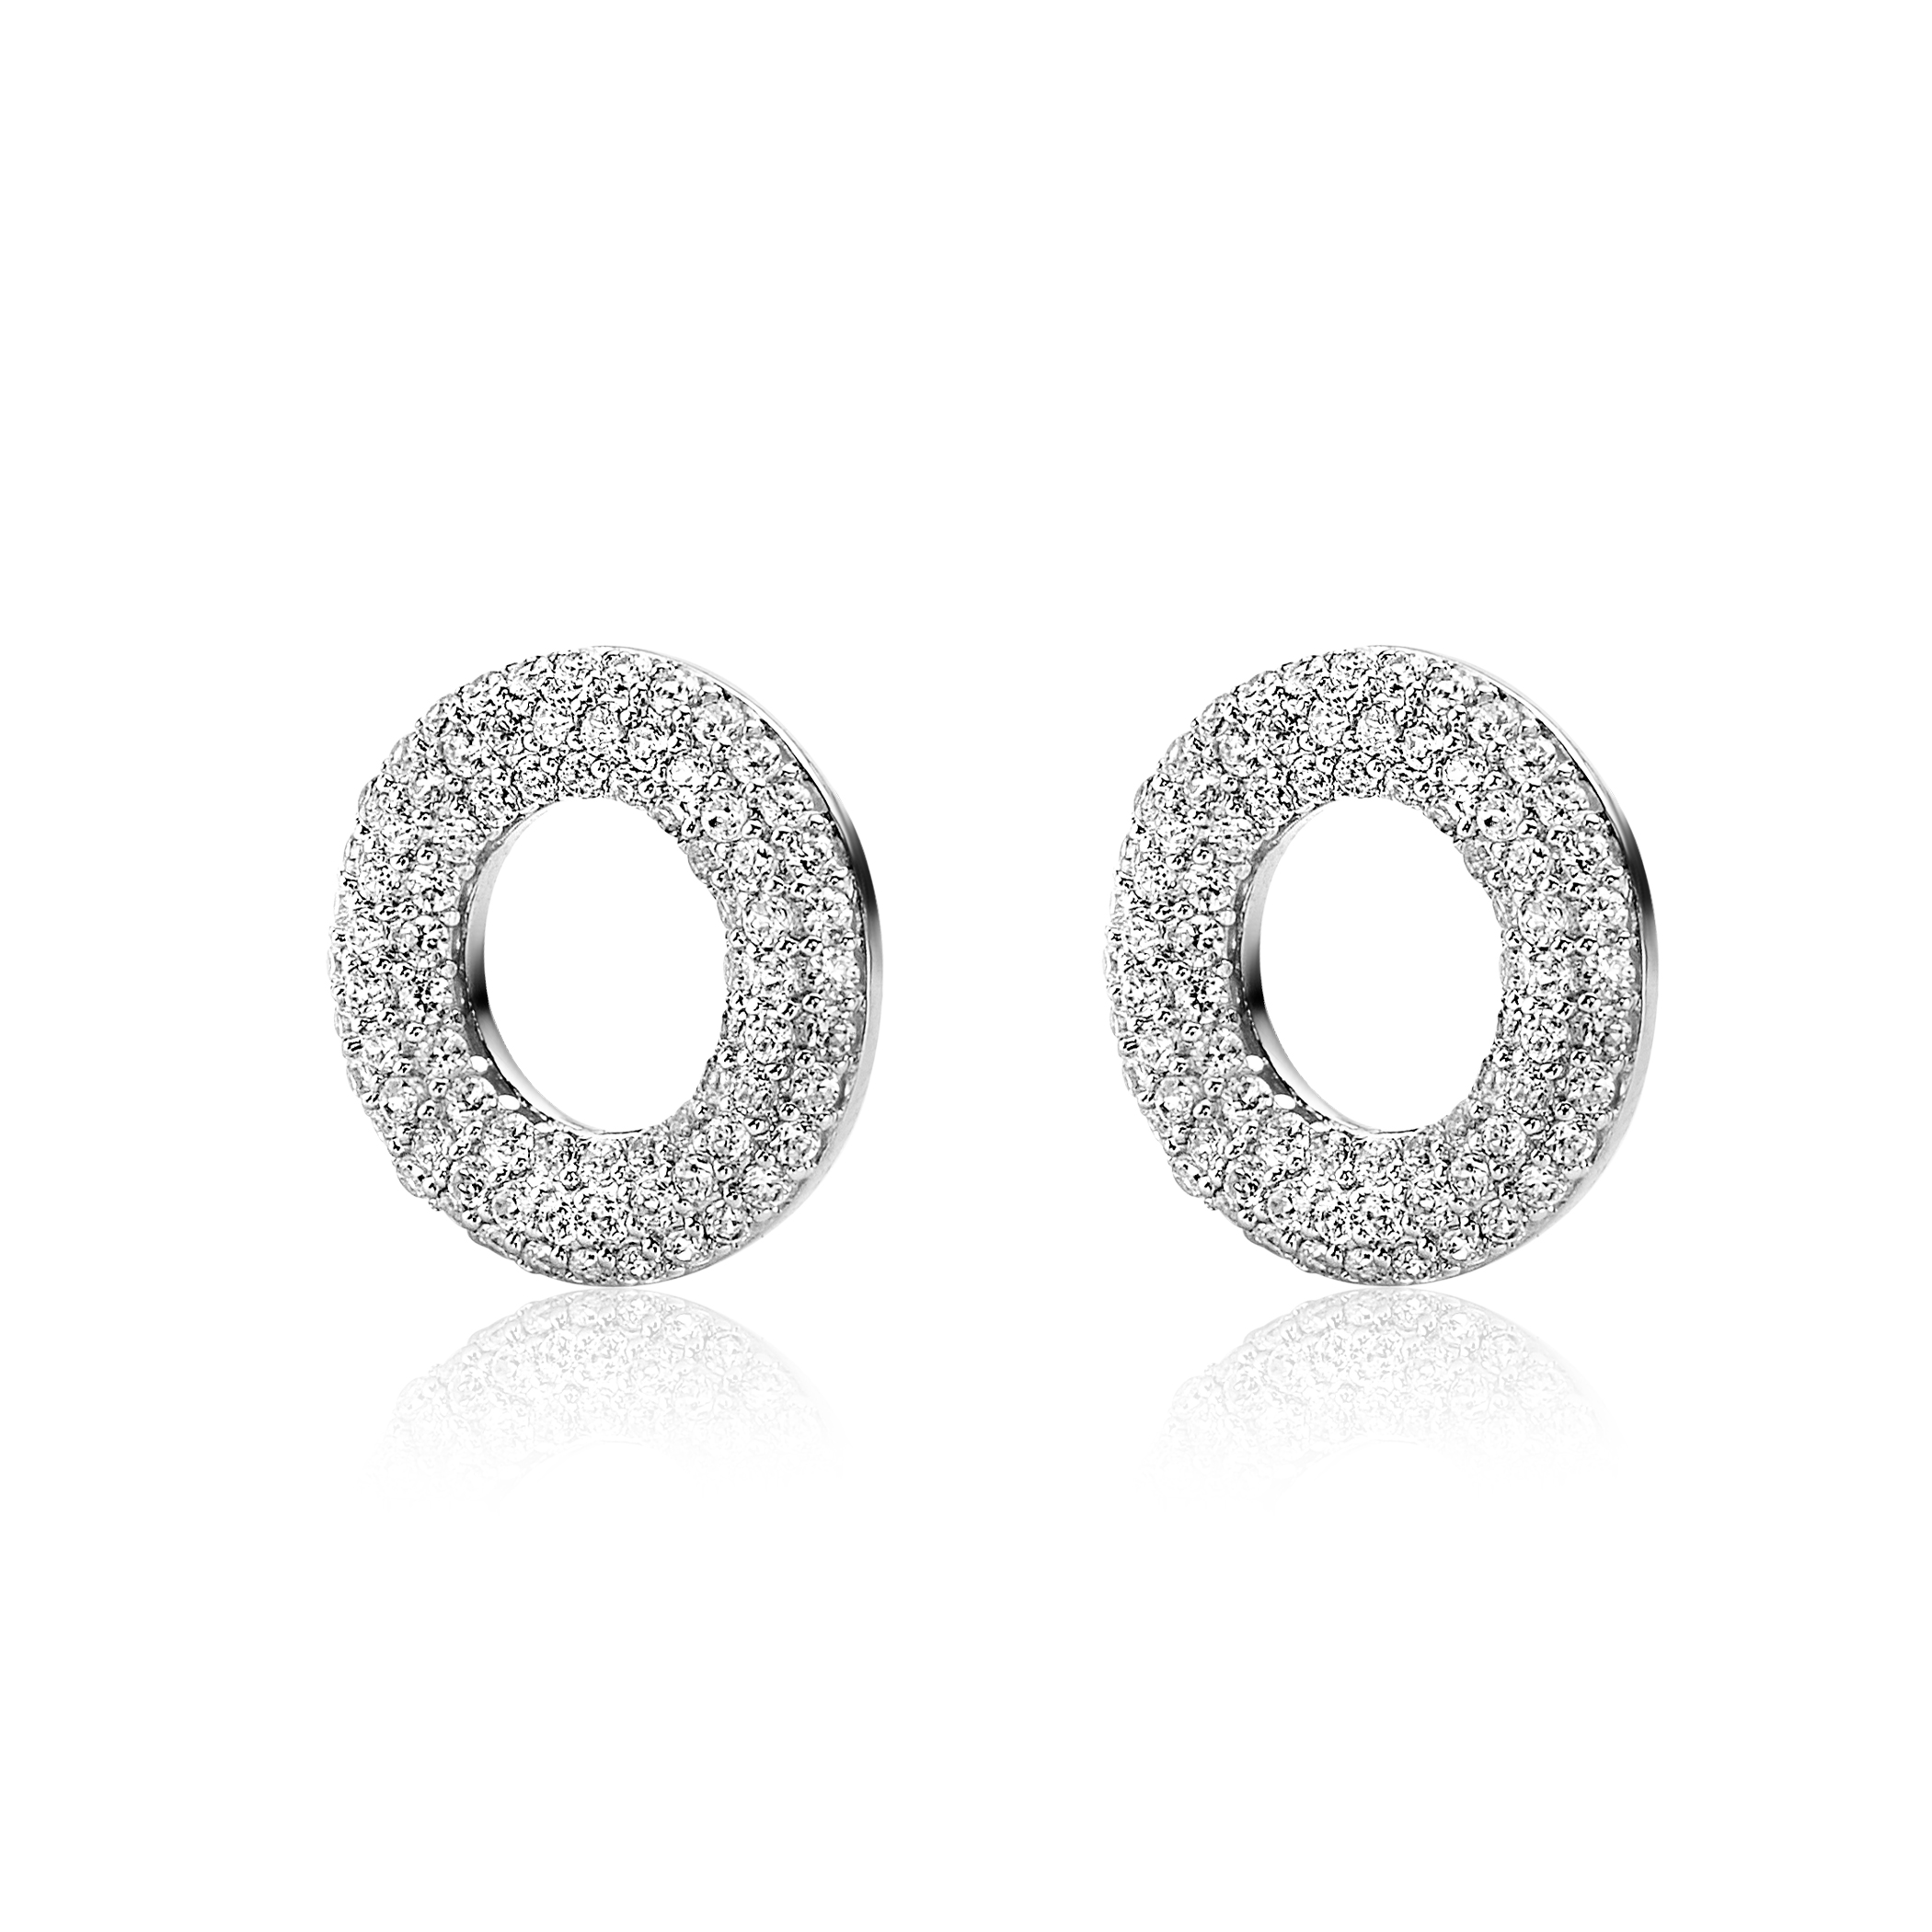 12mm ZINZI Sterling Silver Earrings Pendants Open Circles with White Zirconias ZICH2446 (excl. hoop earrings)